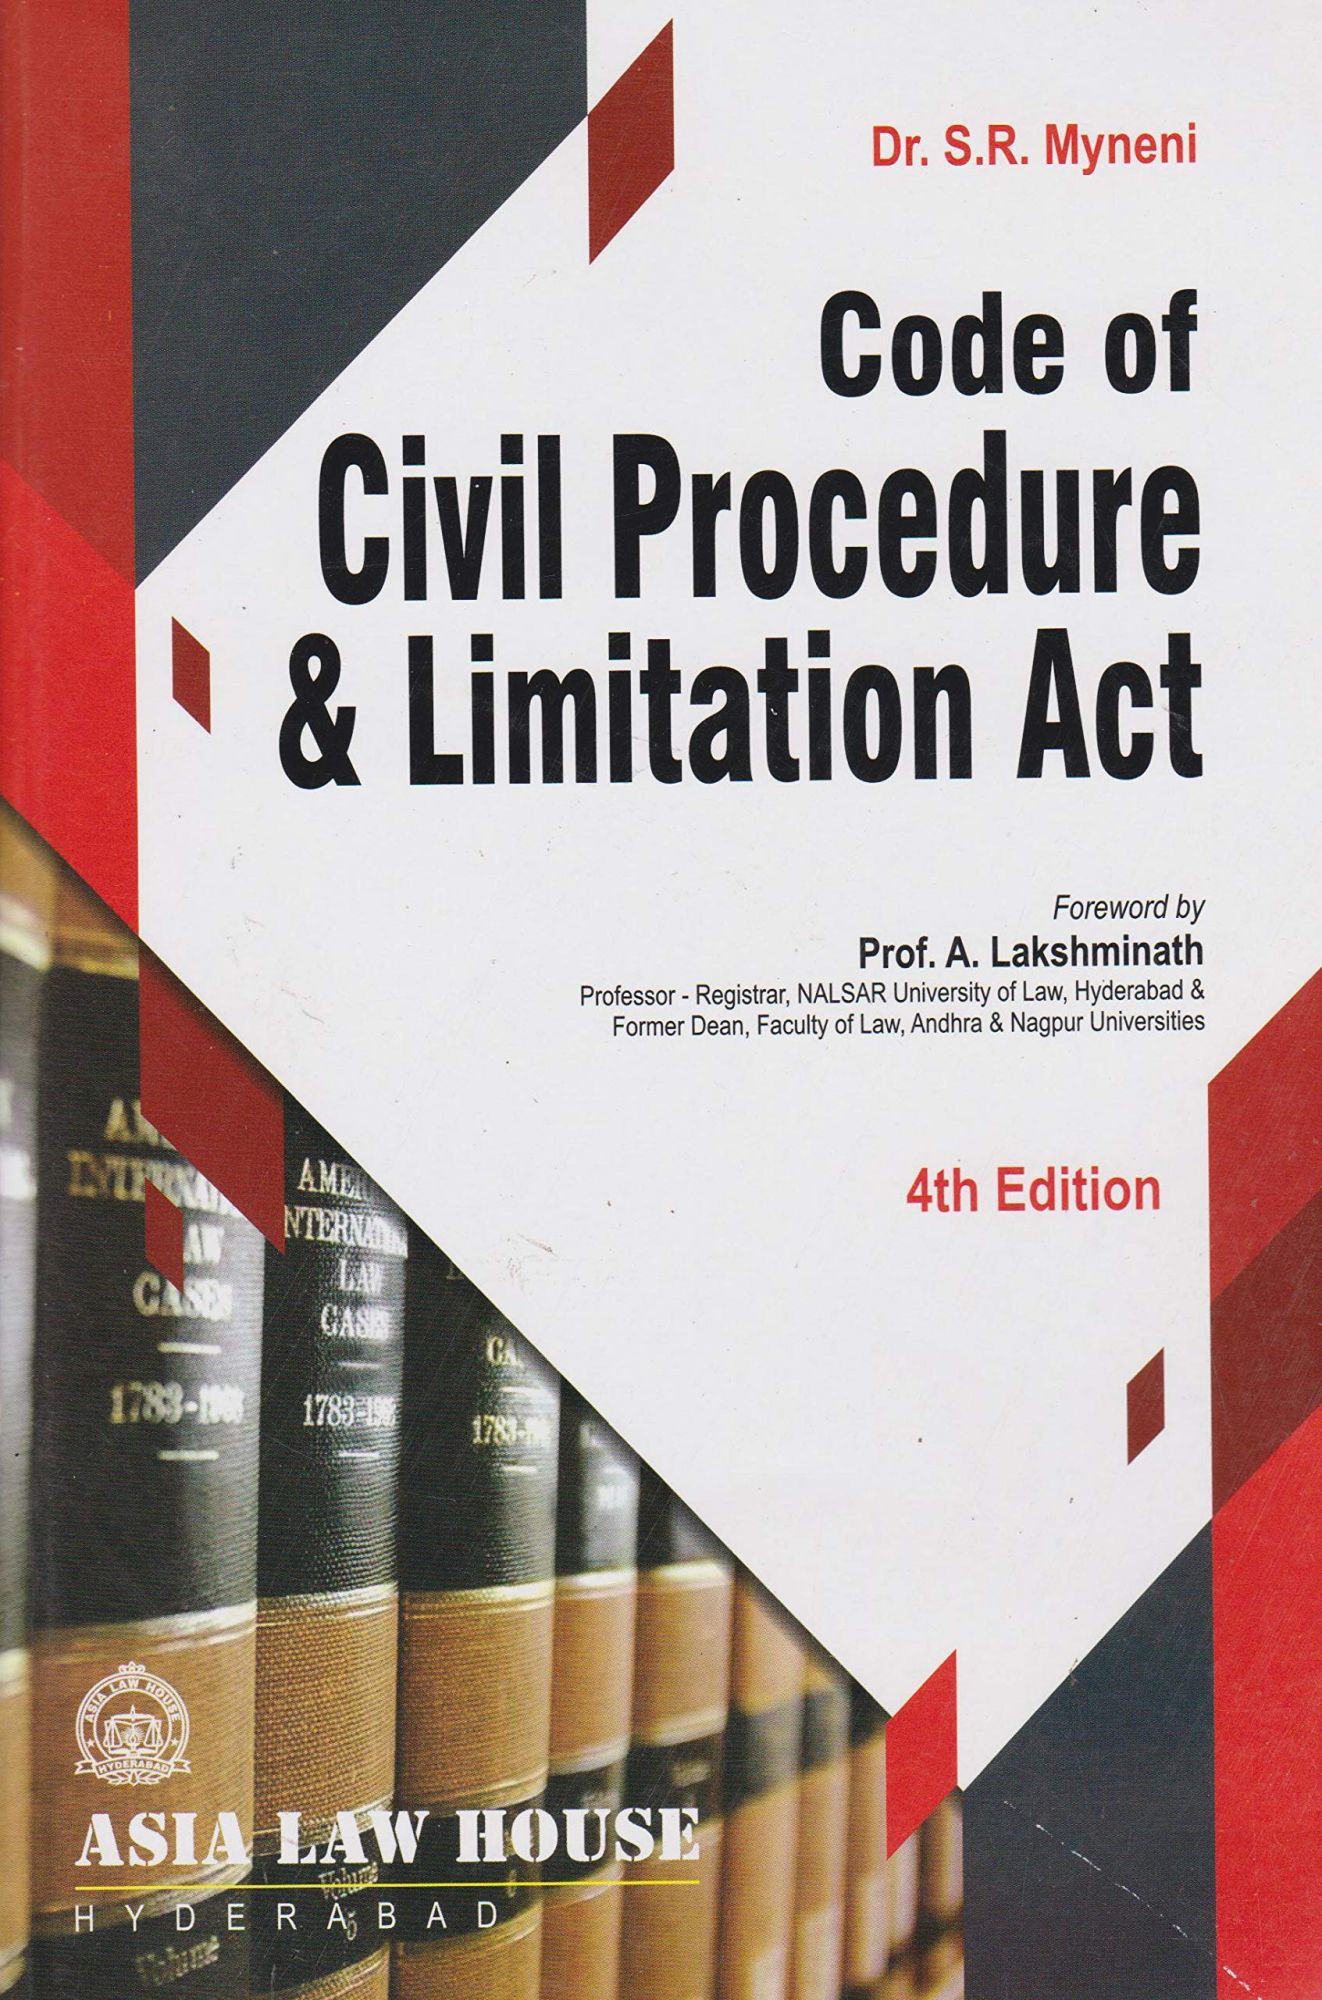 Dr. S. R. Myneni Code of Civil Procedure [CPC] & Limitation Act by Asia Law House